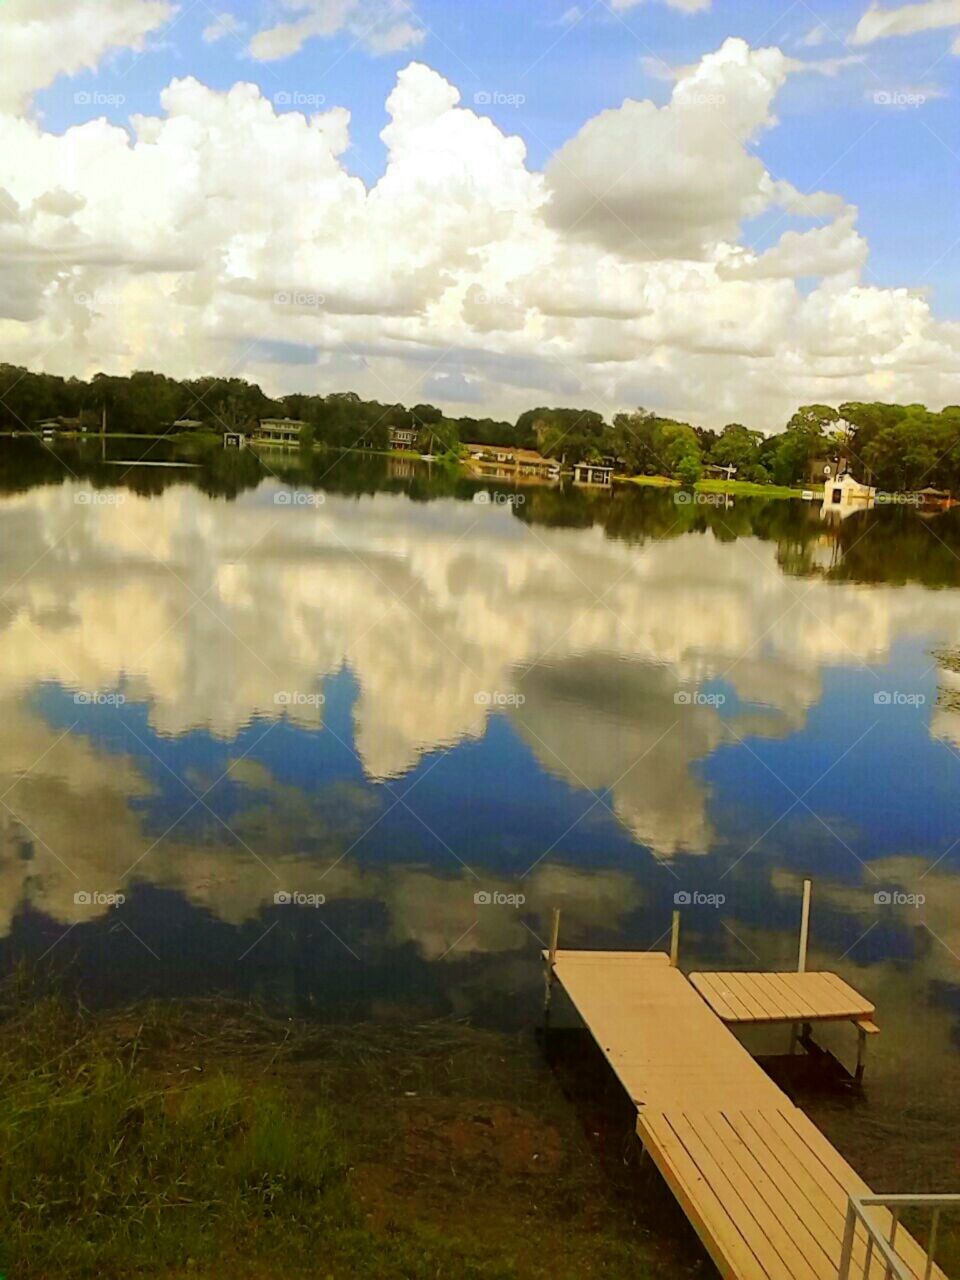 cloud reflections on lake